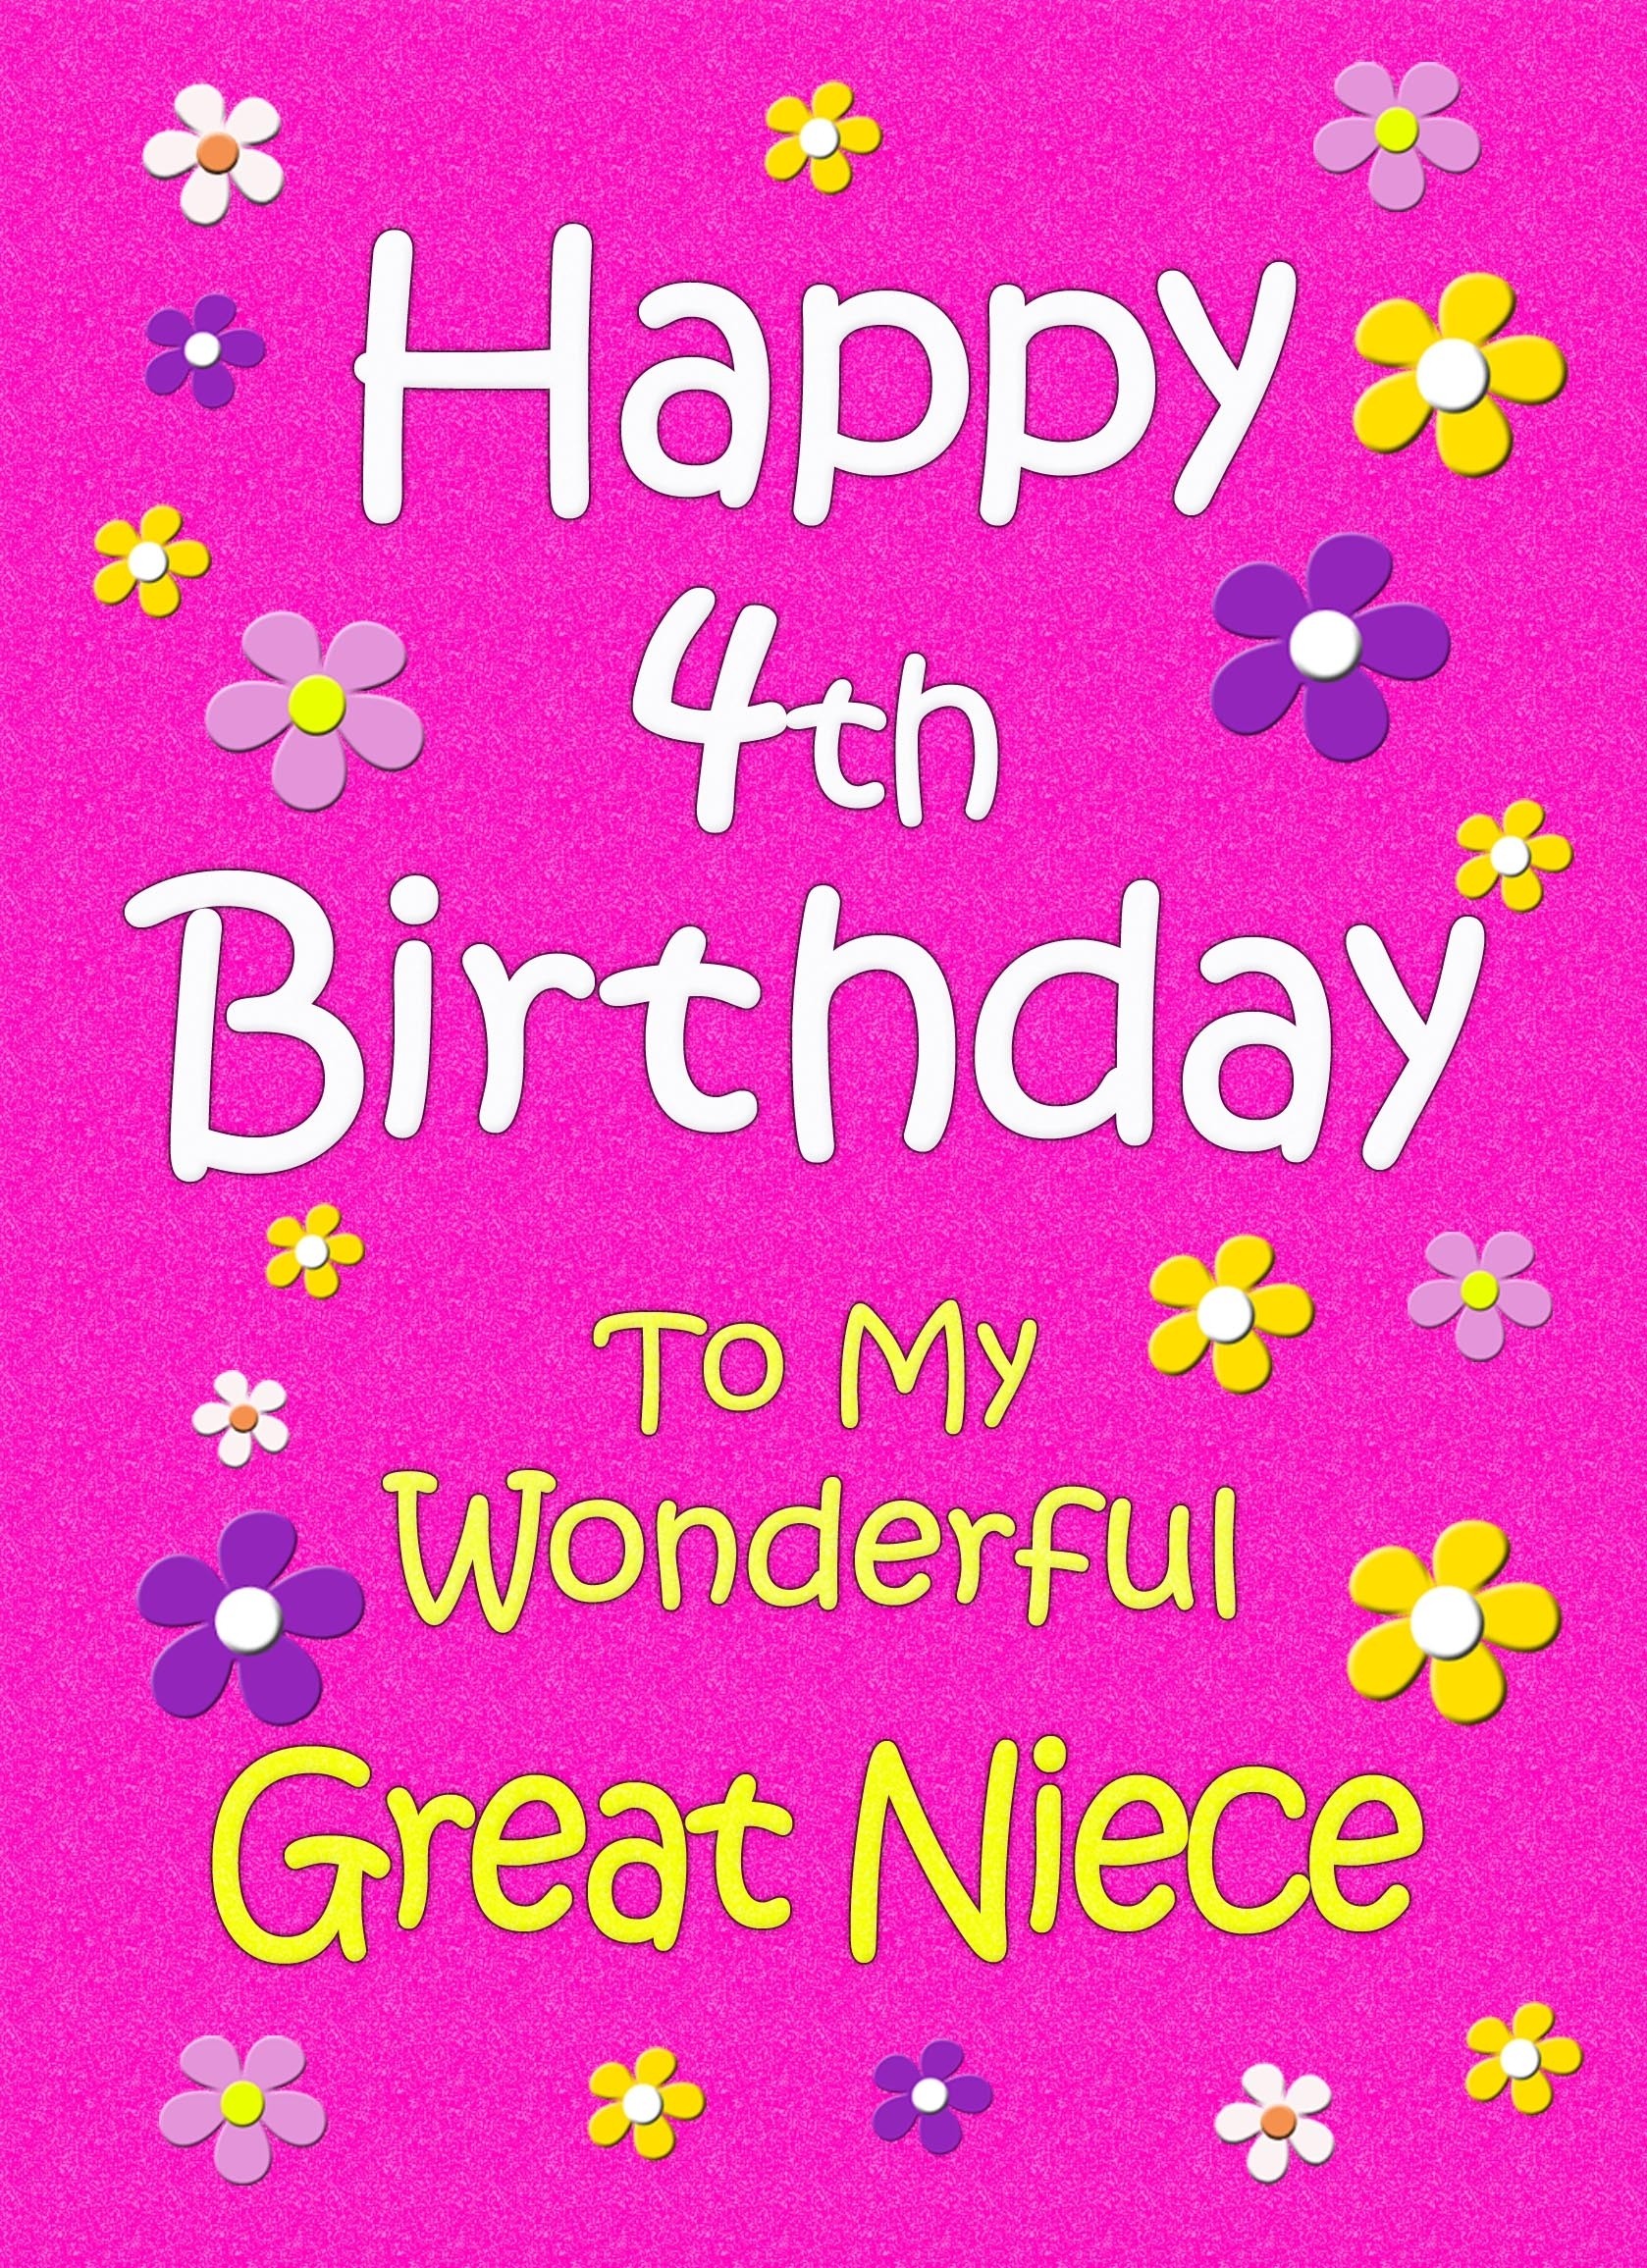 Great Niece 4th Birthday Card (Pink)